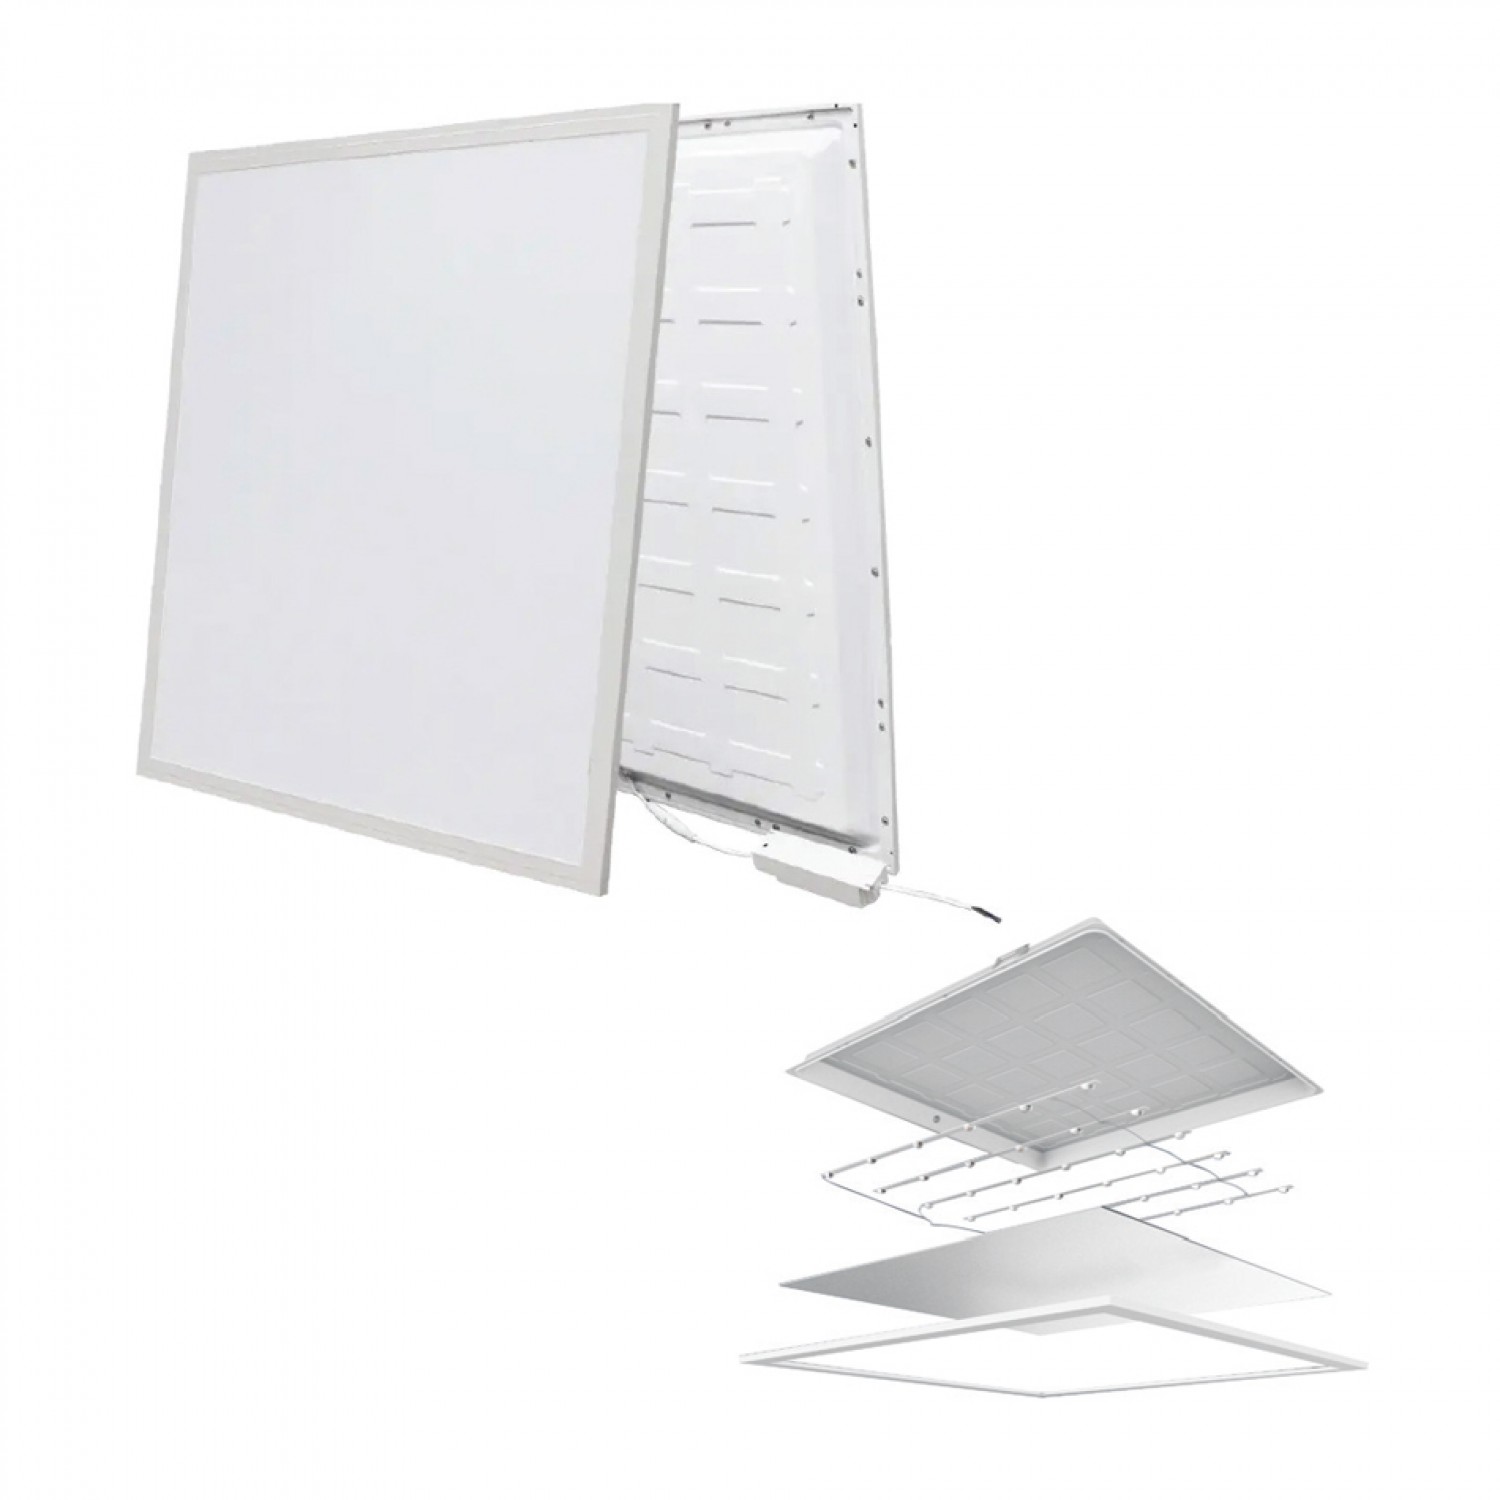 LED Panel 48watt Backlight Τετράγωνο 4000Κ Φυσικό Λευκό D:59,5cm (2.48.02.2)